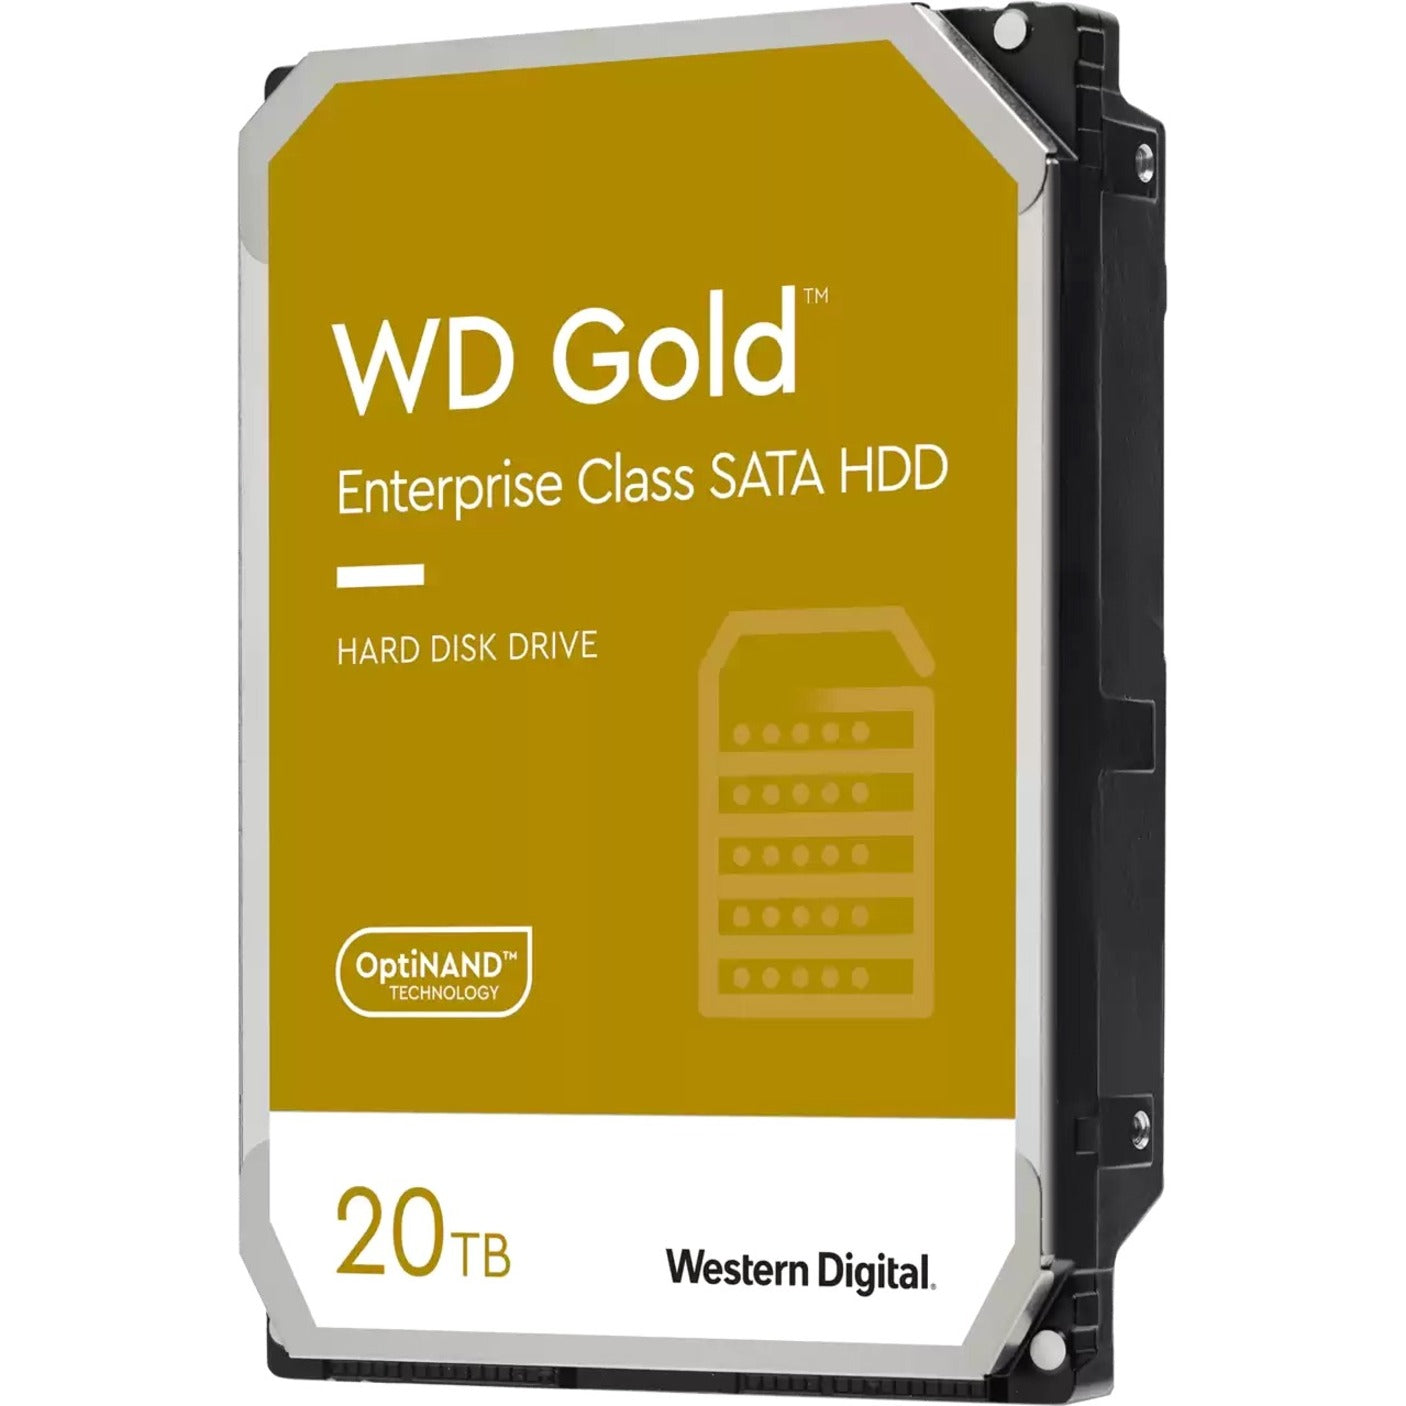 Western Digital Gold Enterprise Class SATA Hard Drive - 20TB Storage Capacity [Discontinued]